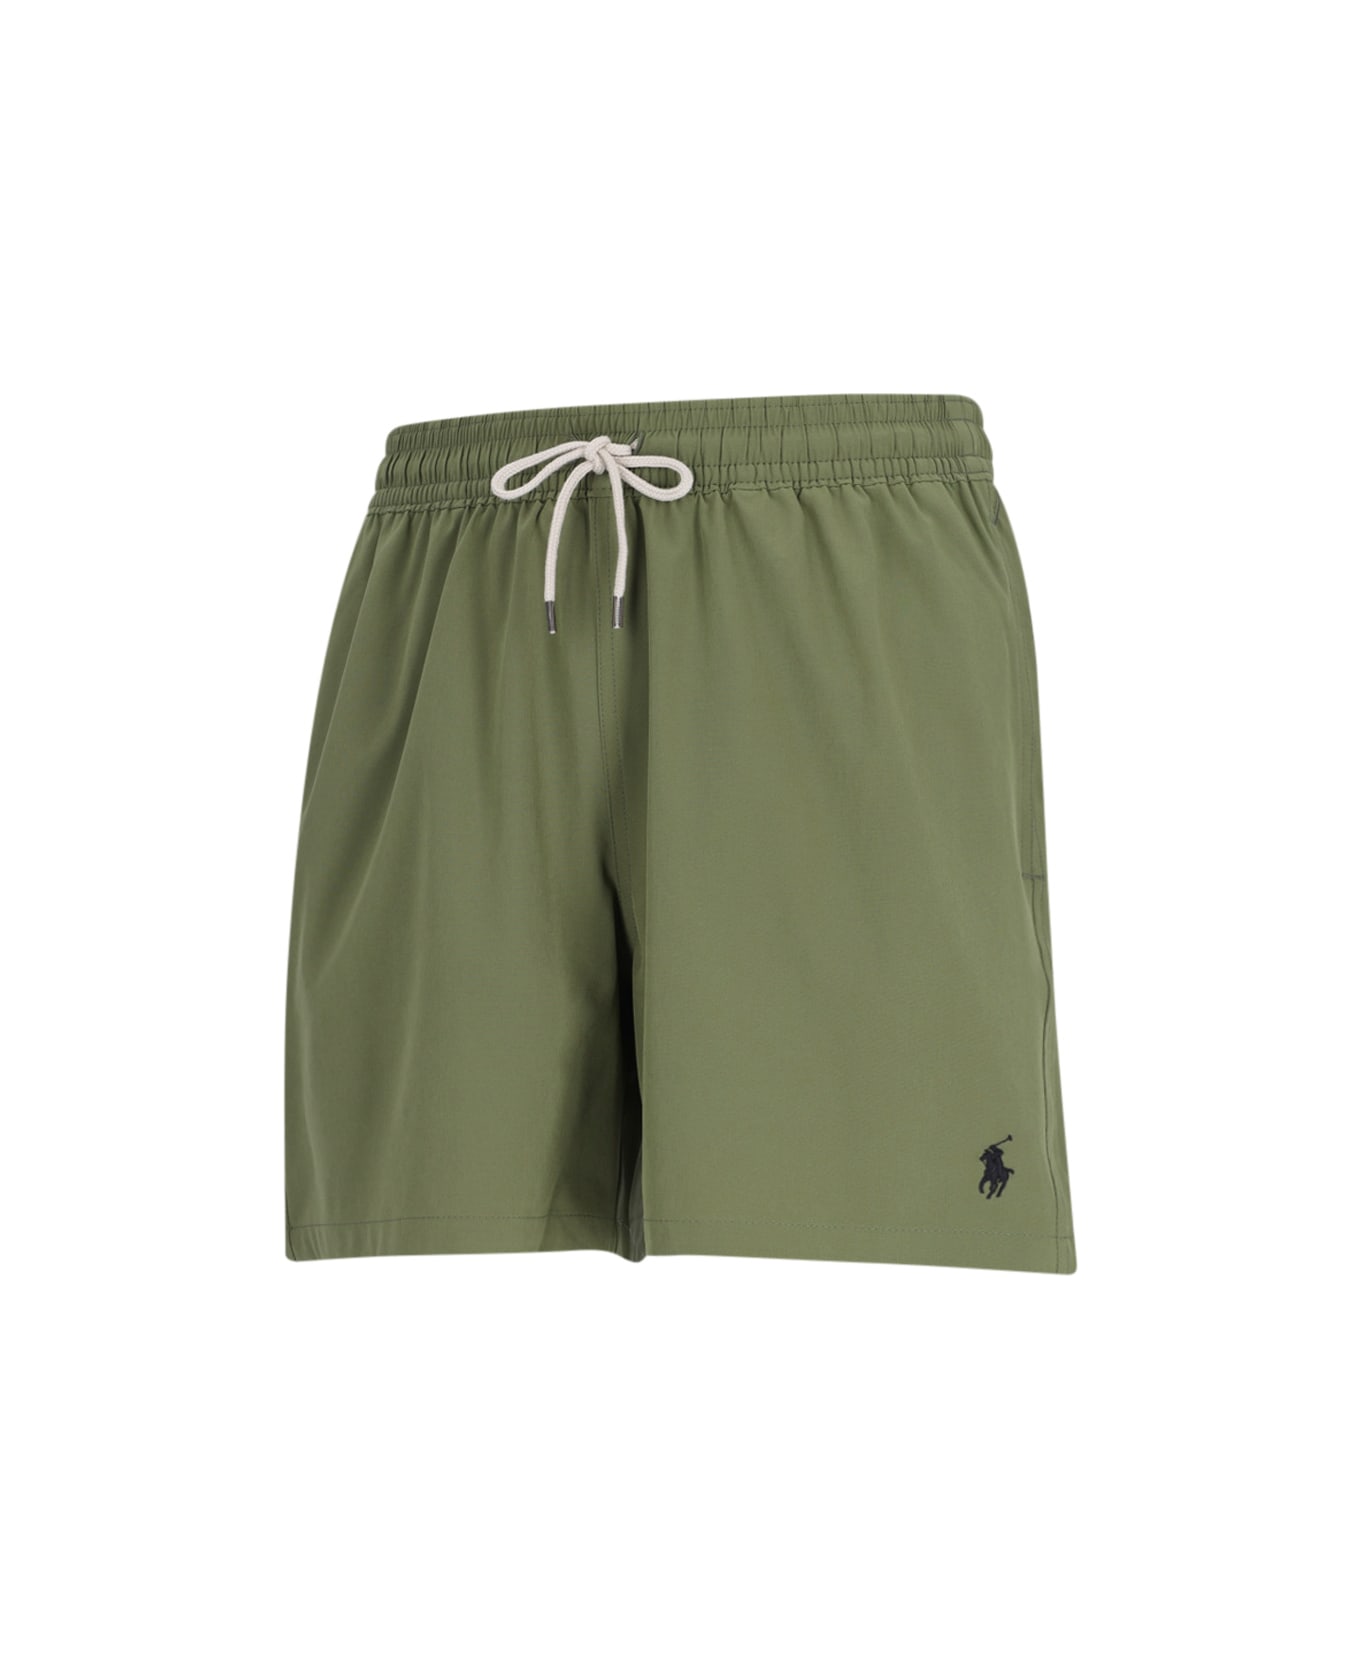 Polo Ralph Lauren 'traveler' Swim Shorts - Sage 水着